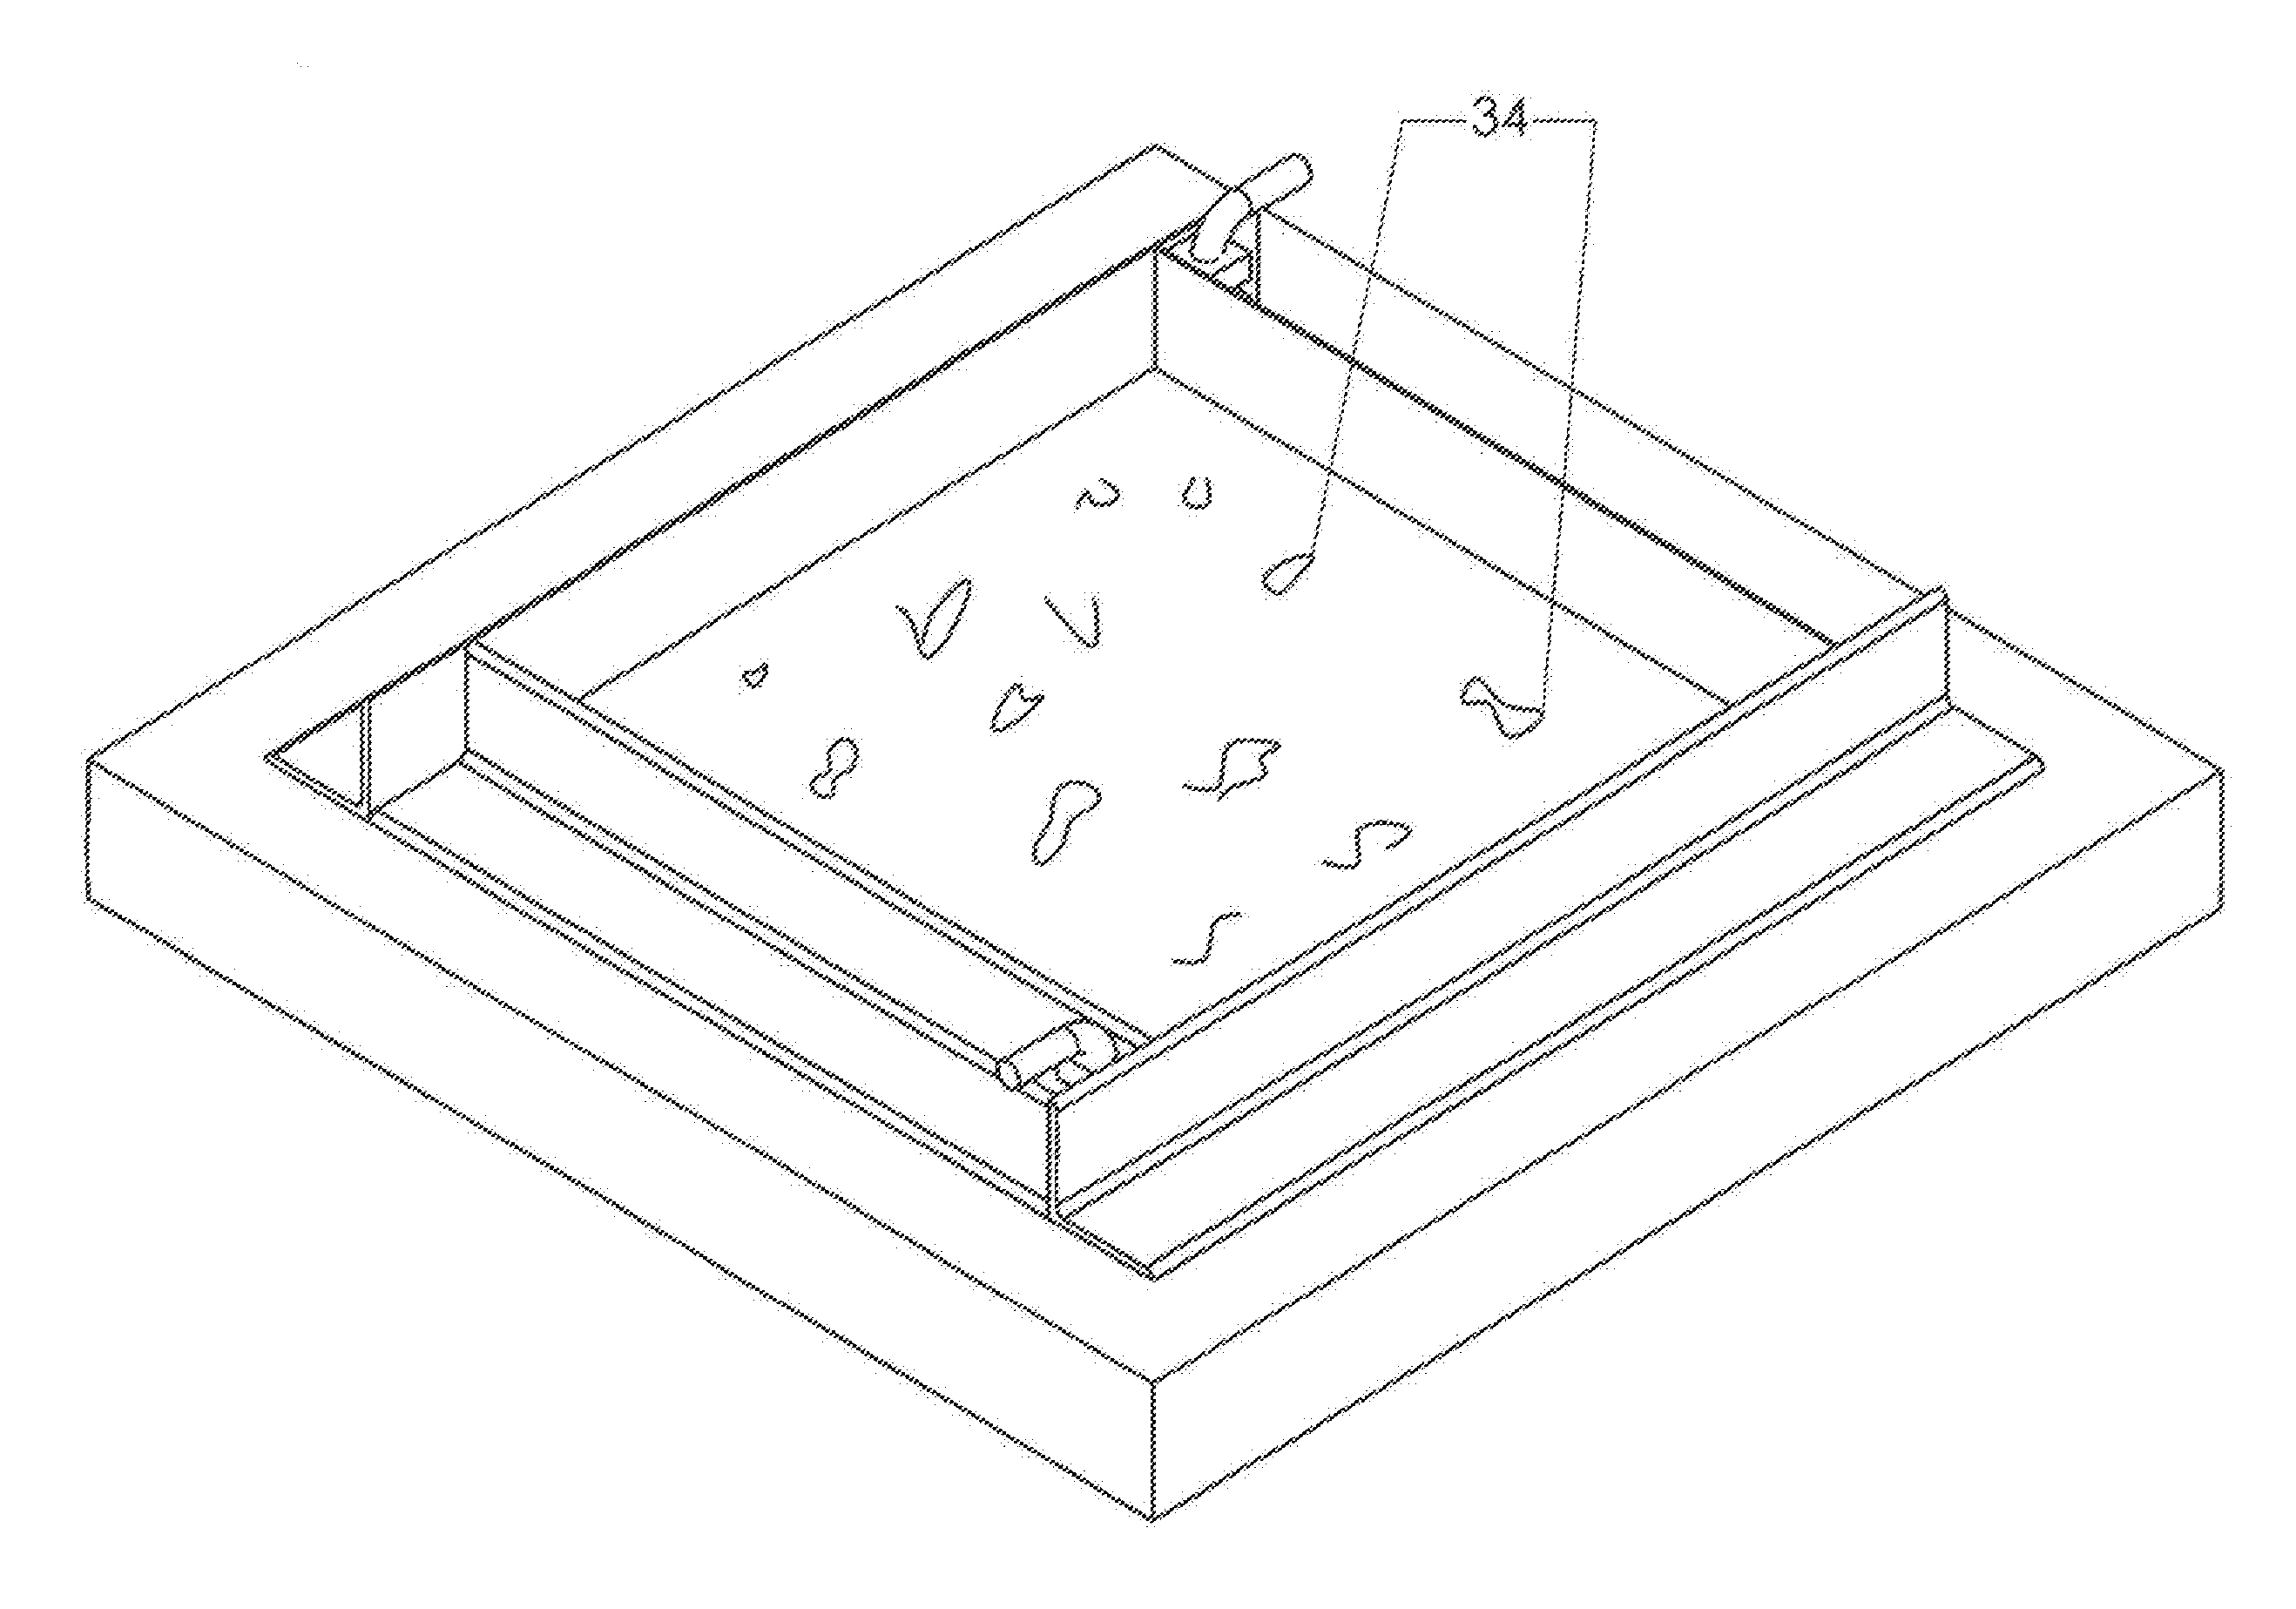 Method of Producing Limestone-Simulating Concrete